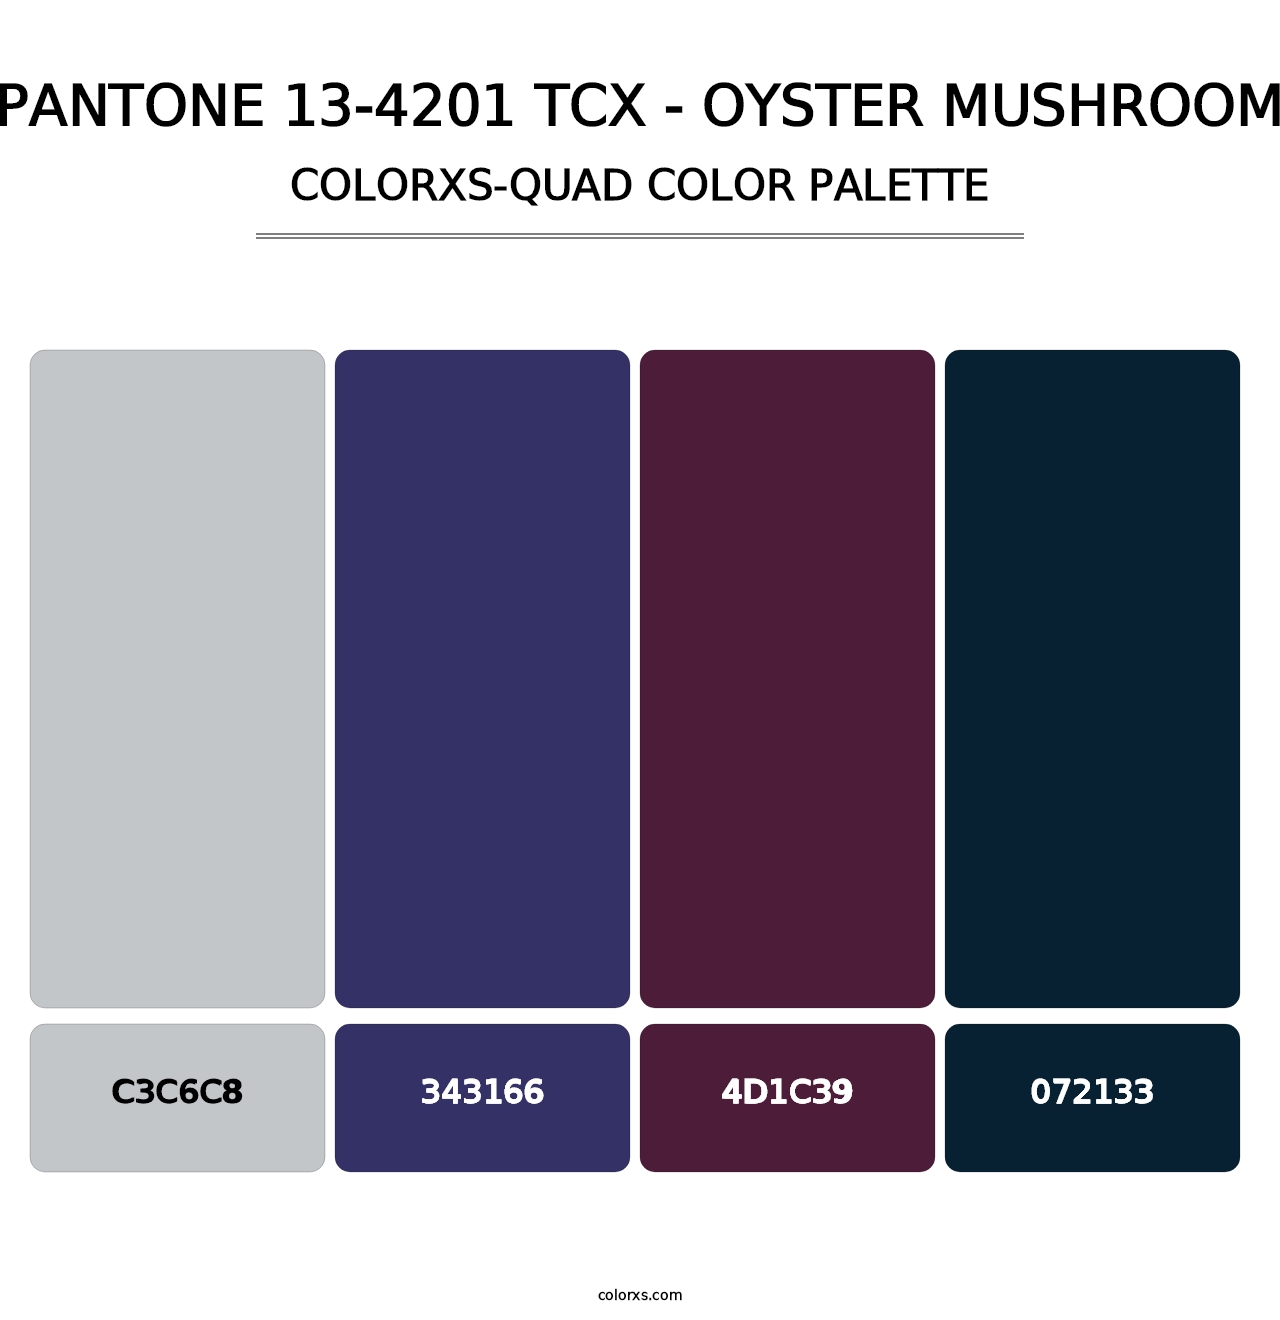 PANTONE 13-4201 TCX - Oyster Mushroom - Colorxs Quad Palette